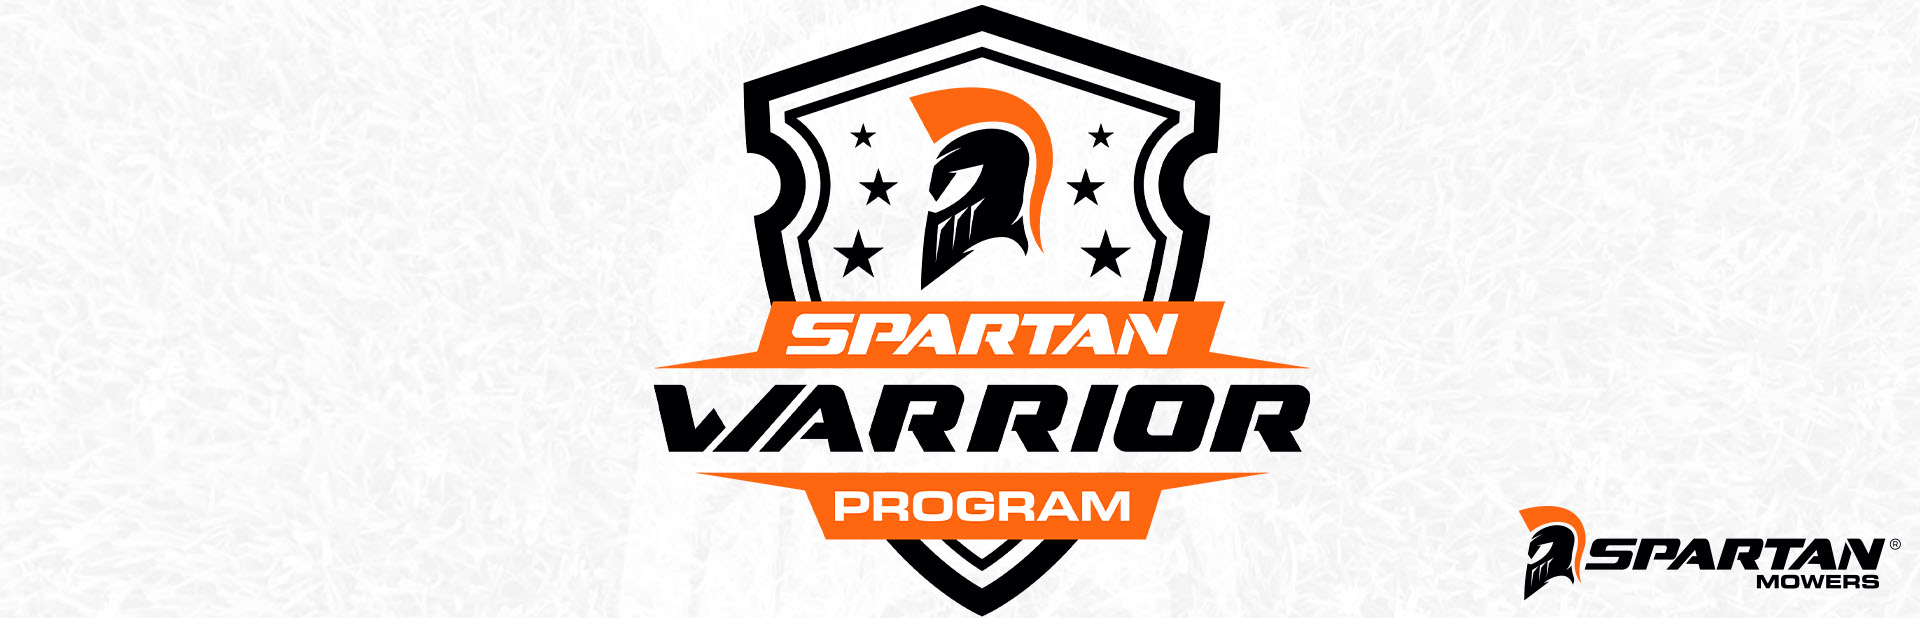 Warrior Program